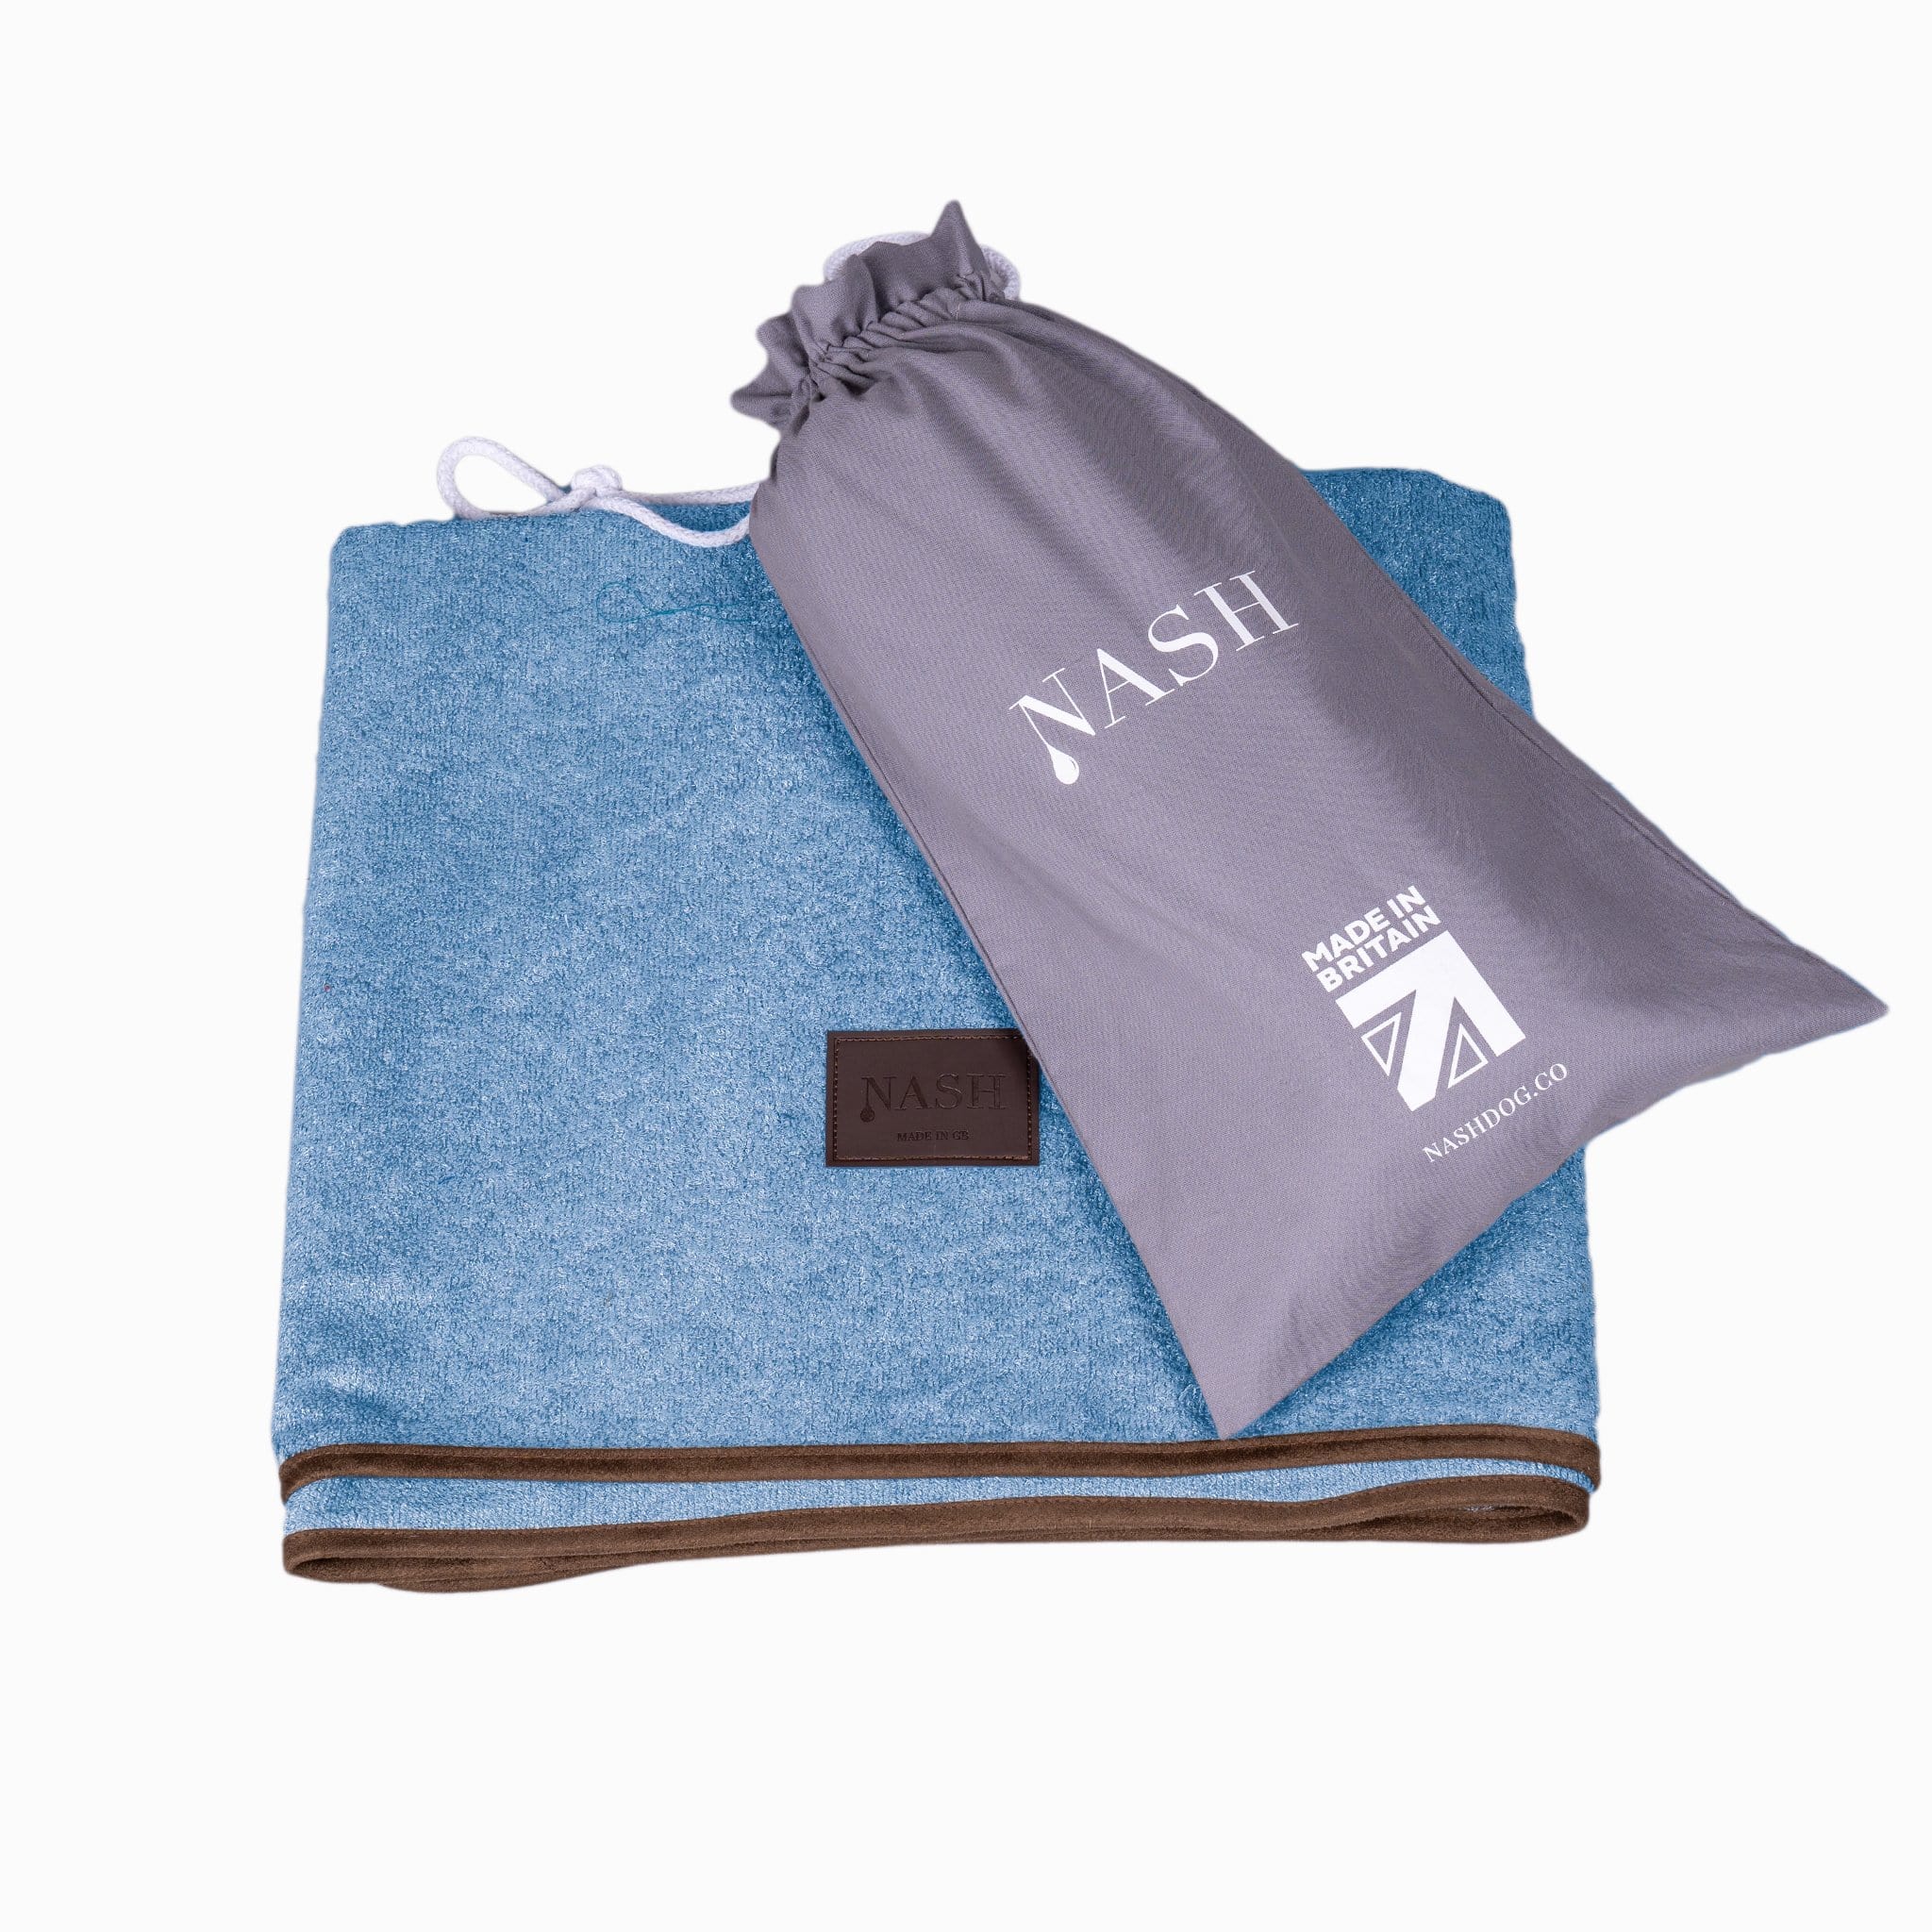 The NASH bamboo dog throw in Cambridge blue, and its reusable bag.